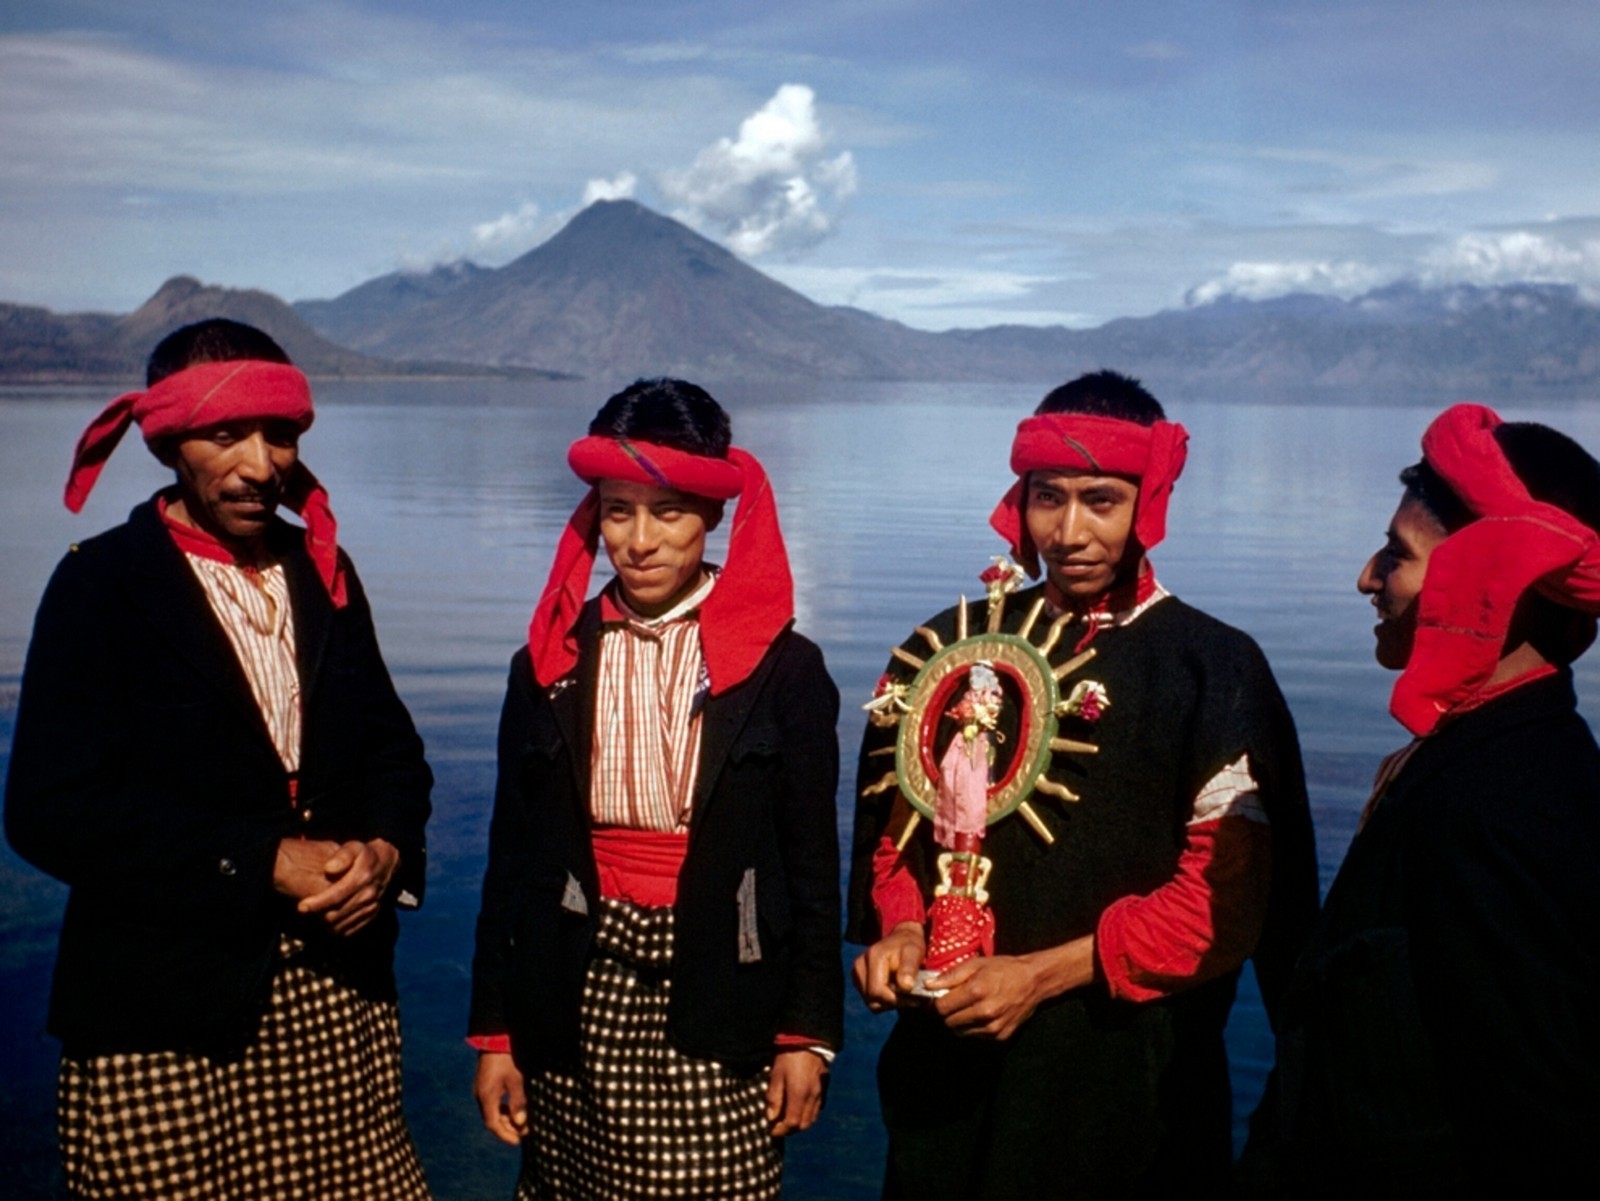 Члены братства Сан-Антонио Палопо на озере Атитлан в Гватемале. Фотограф Луис Марден